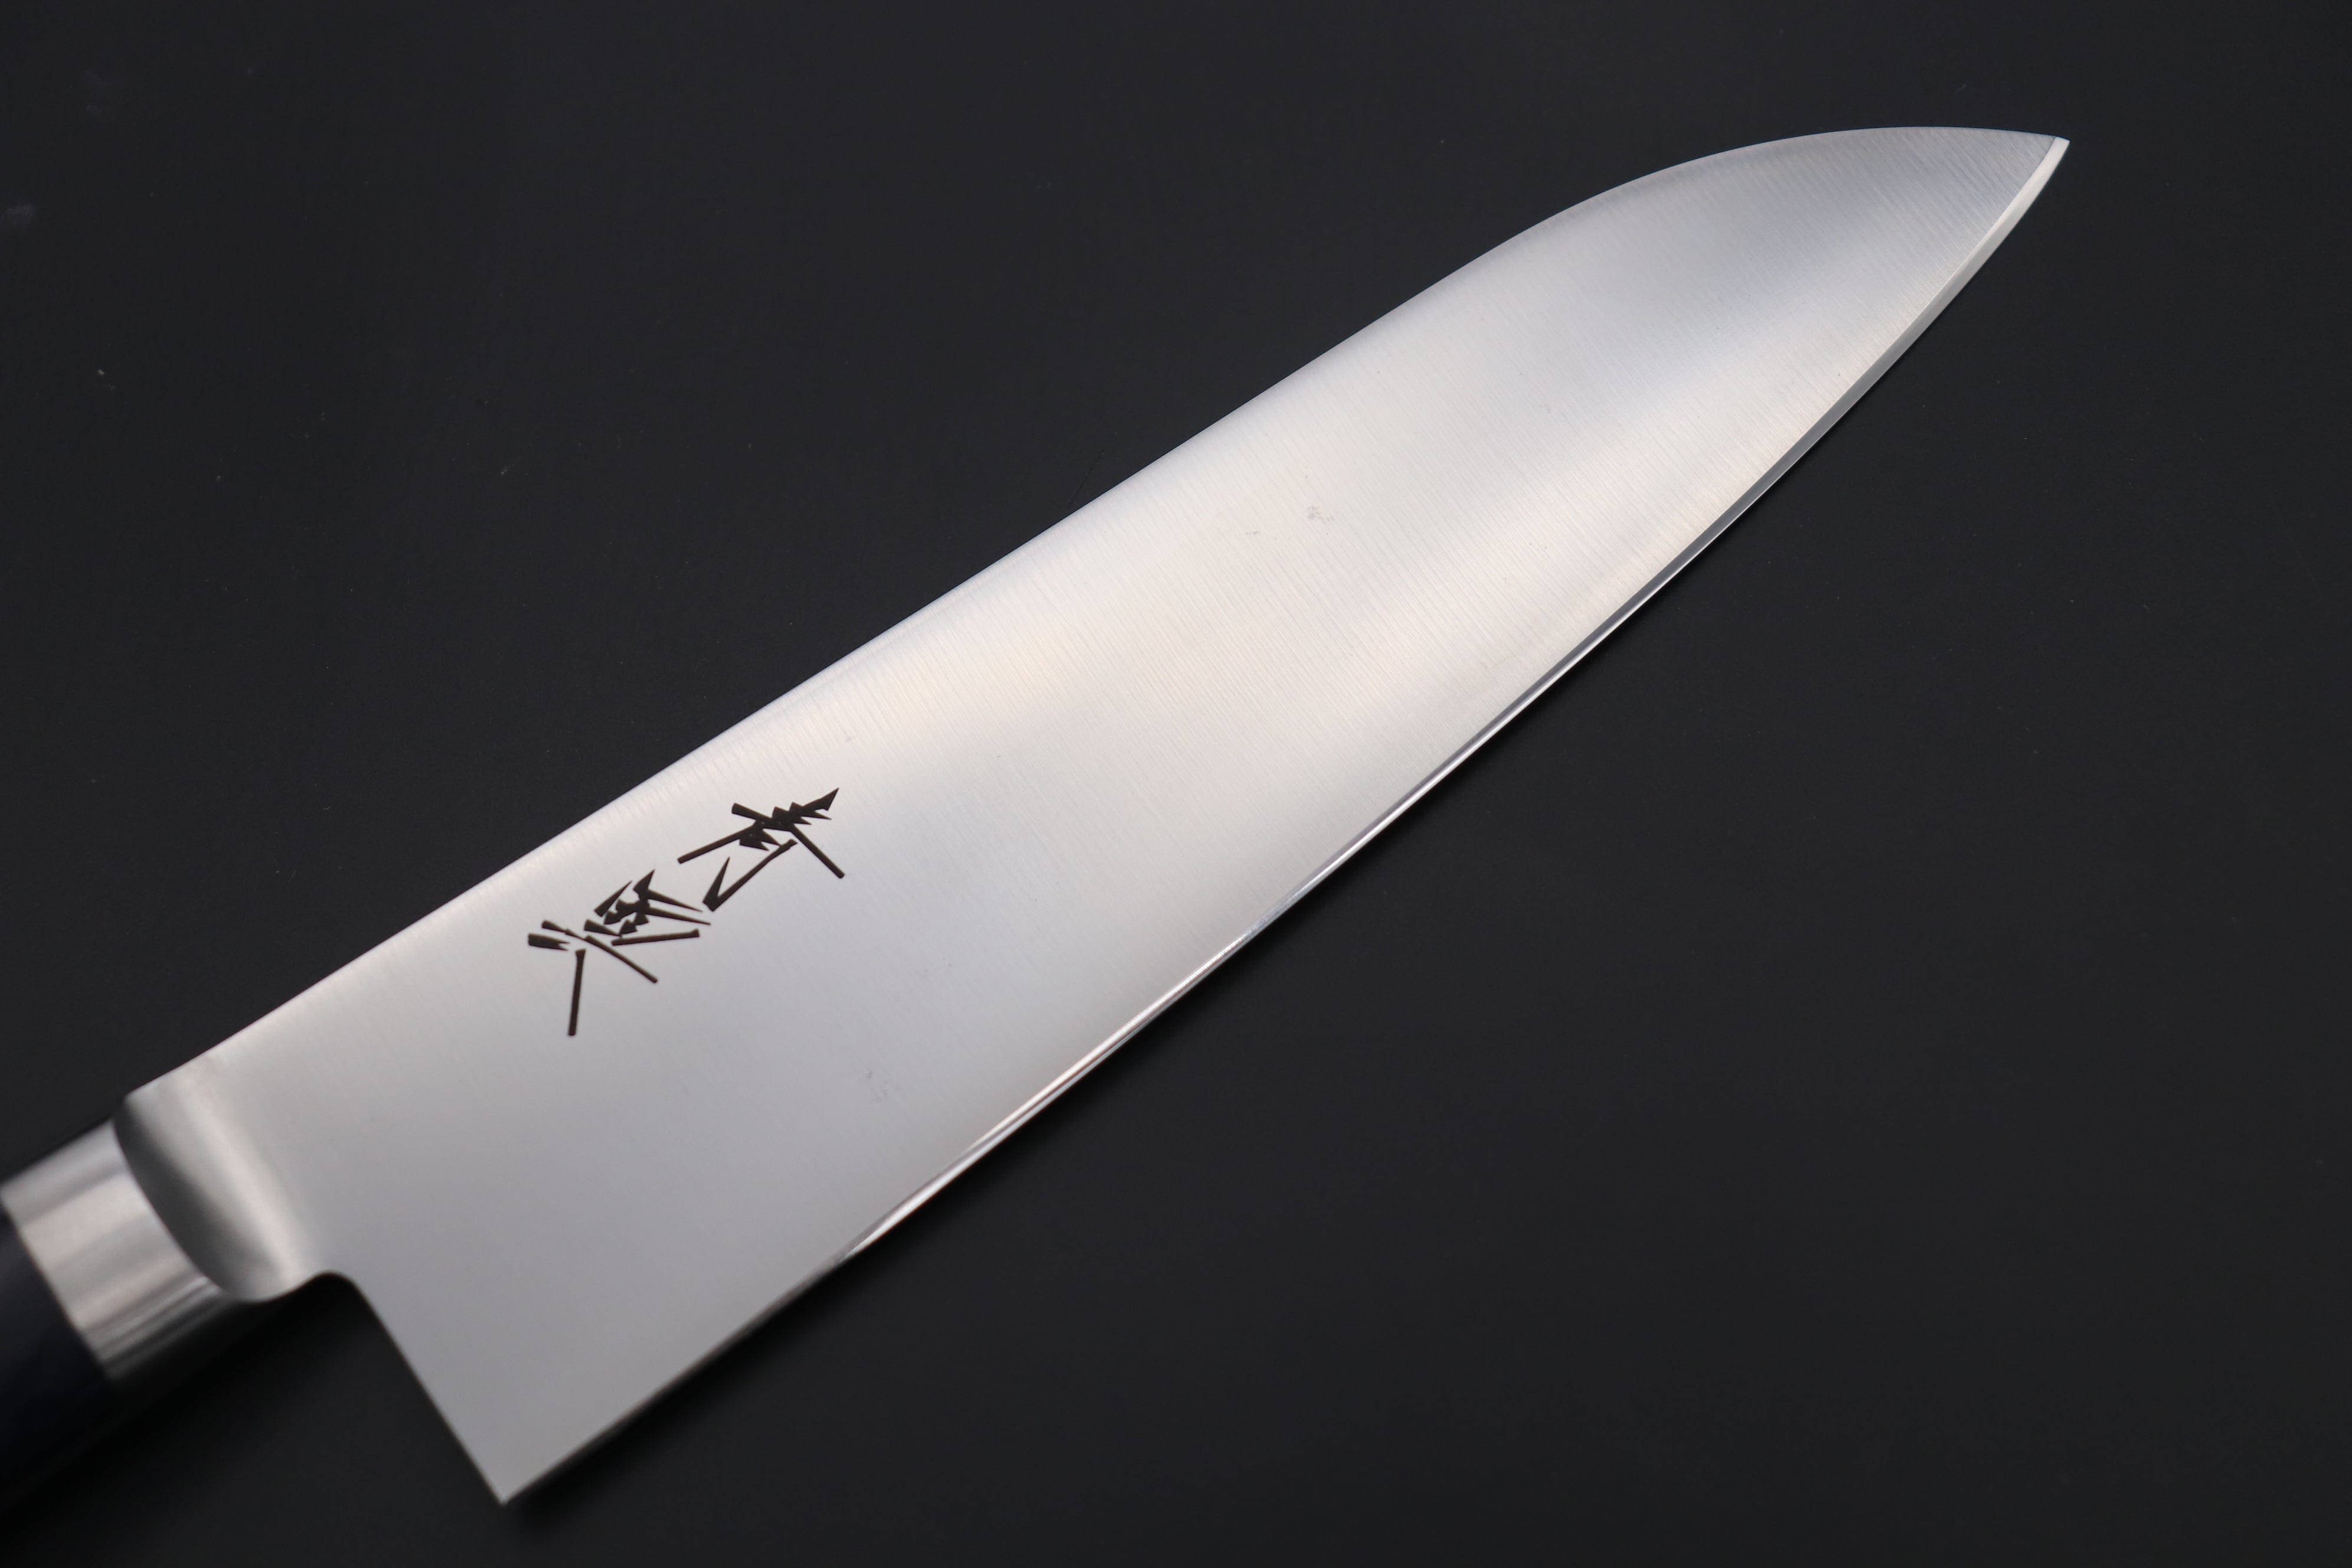 Kitchen Knives Set Of 3, Chef Knife Set High Carbon Stainless Steel Knives  Included 8 Chef Knife, 7 Santoku Knife, 5 Utility Knife, Pakkawood